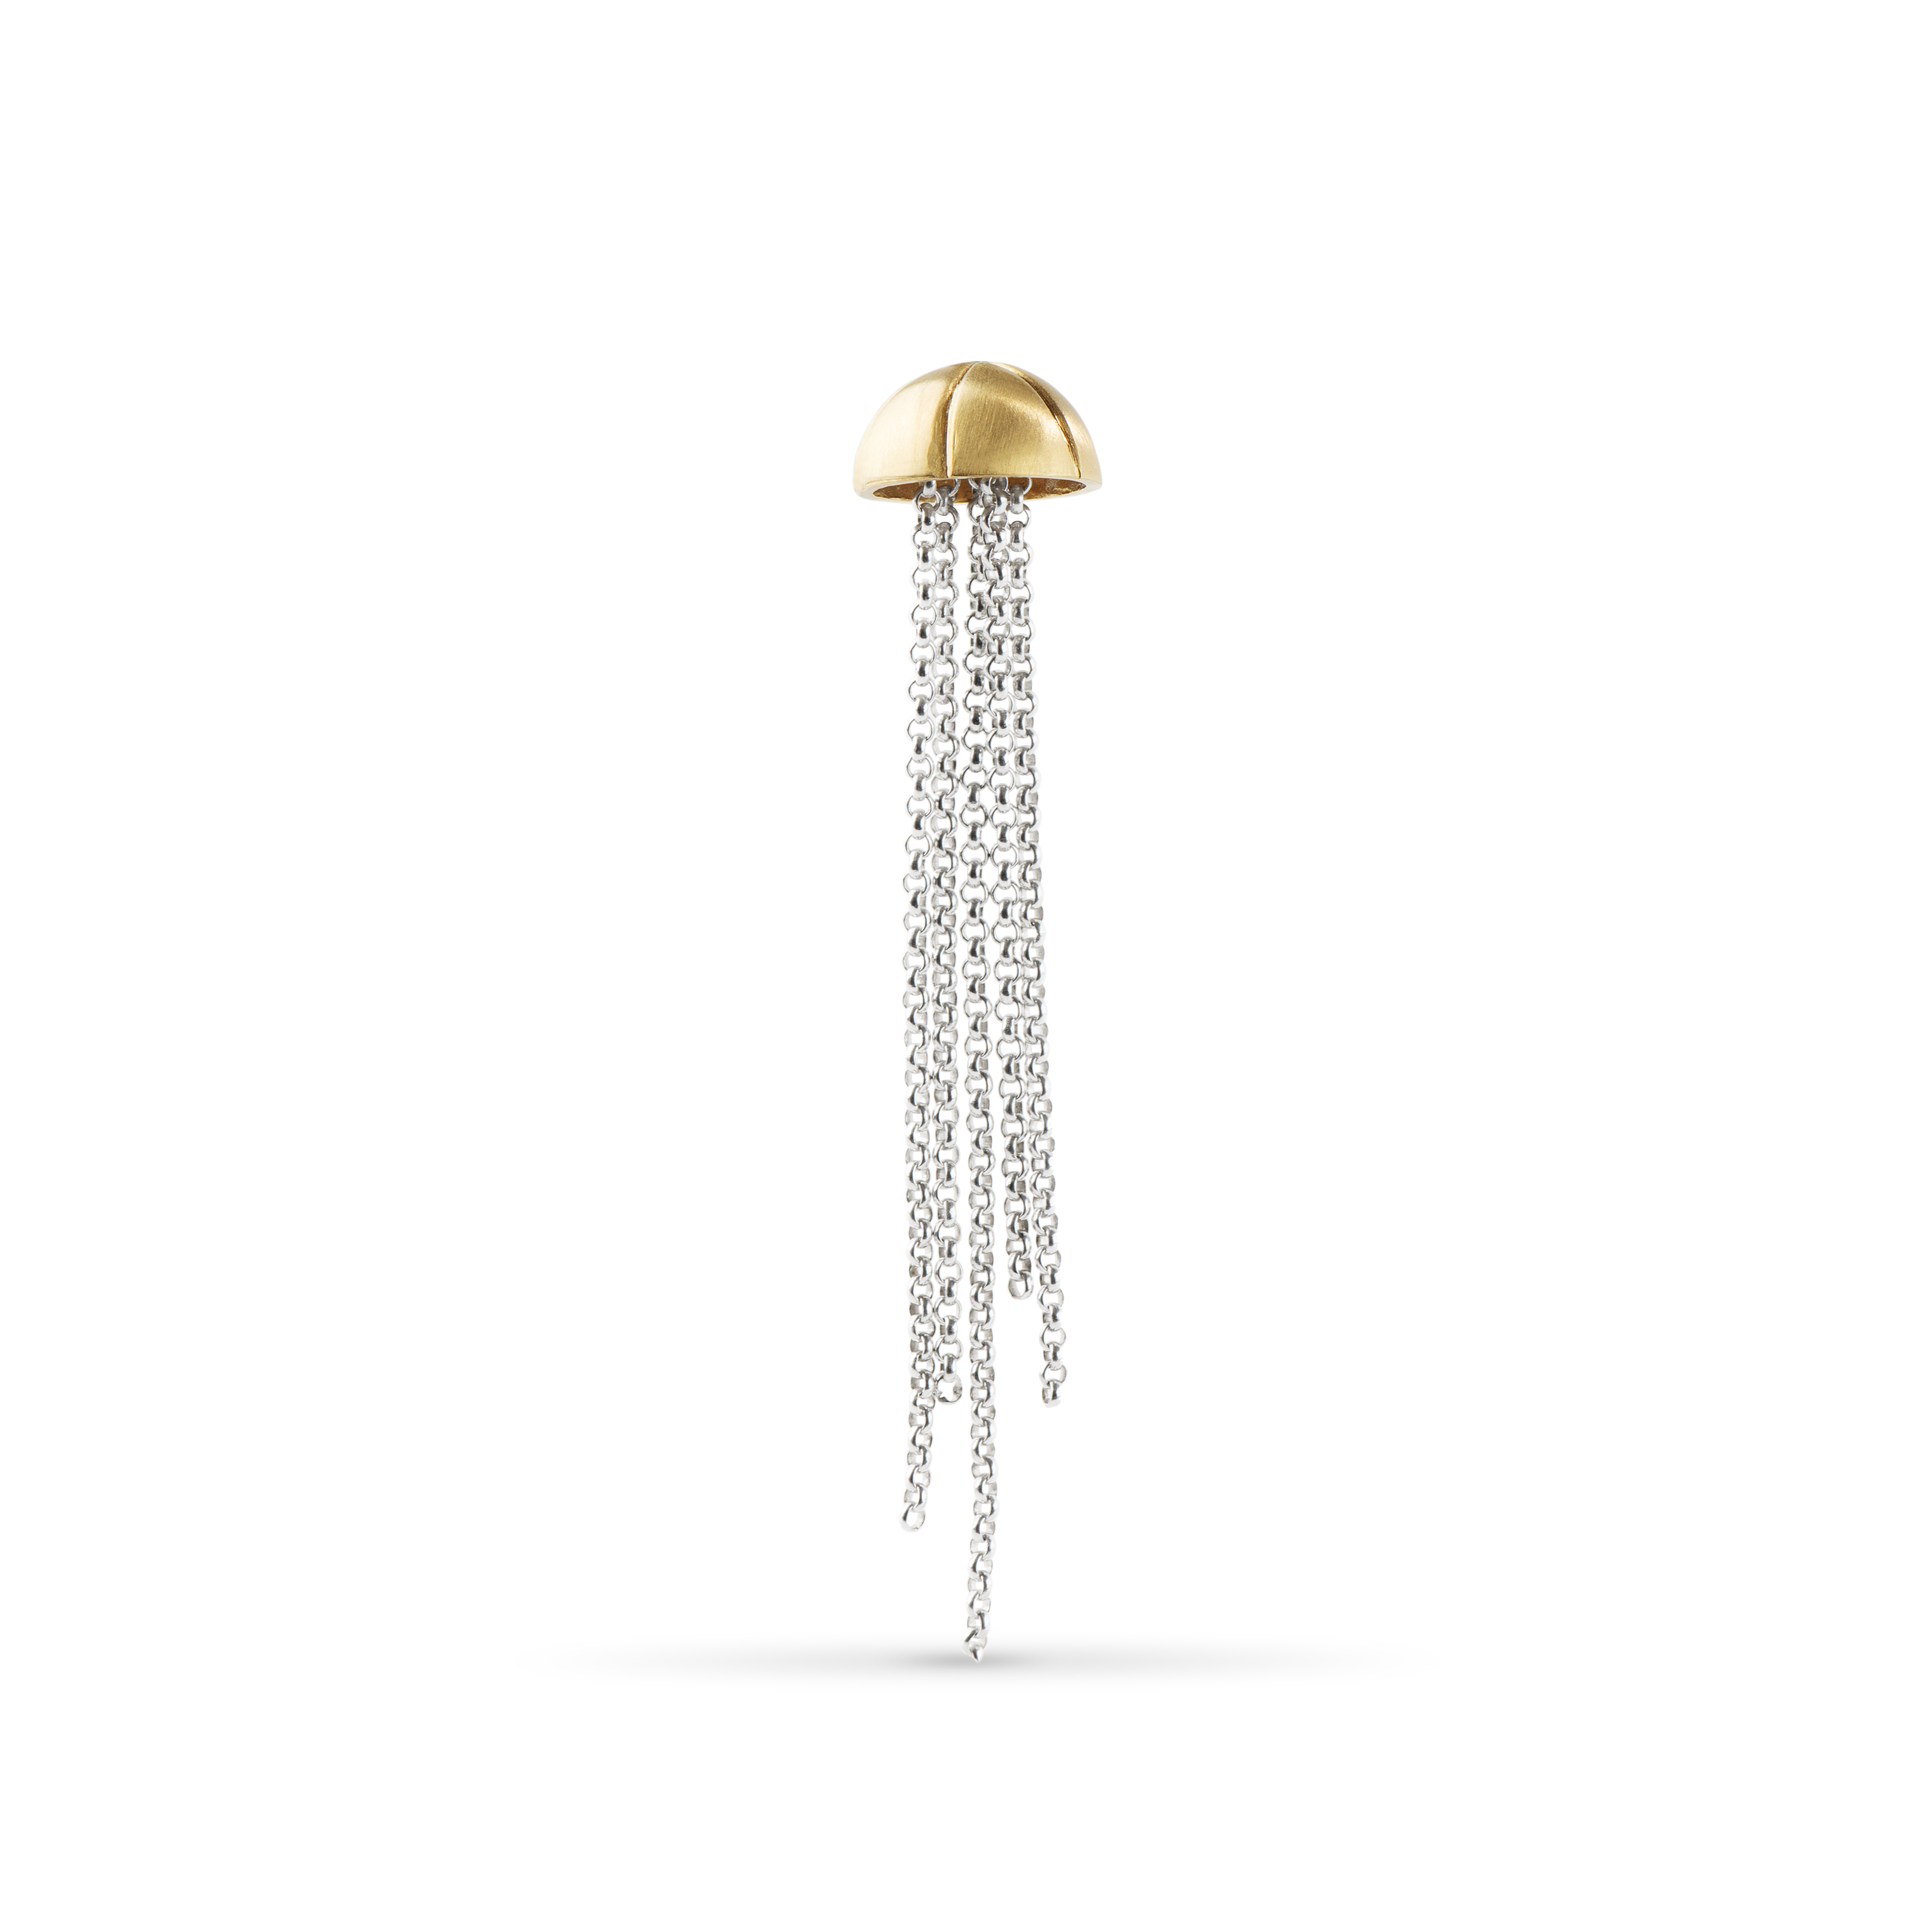 Brincos Jellyfish - Prata e Ouro - Image 2